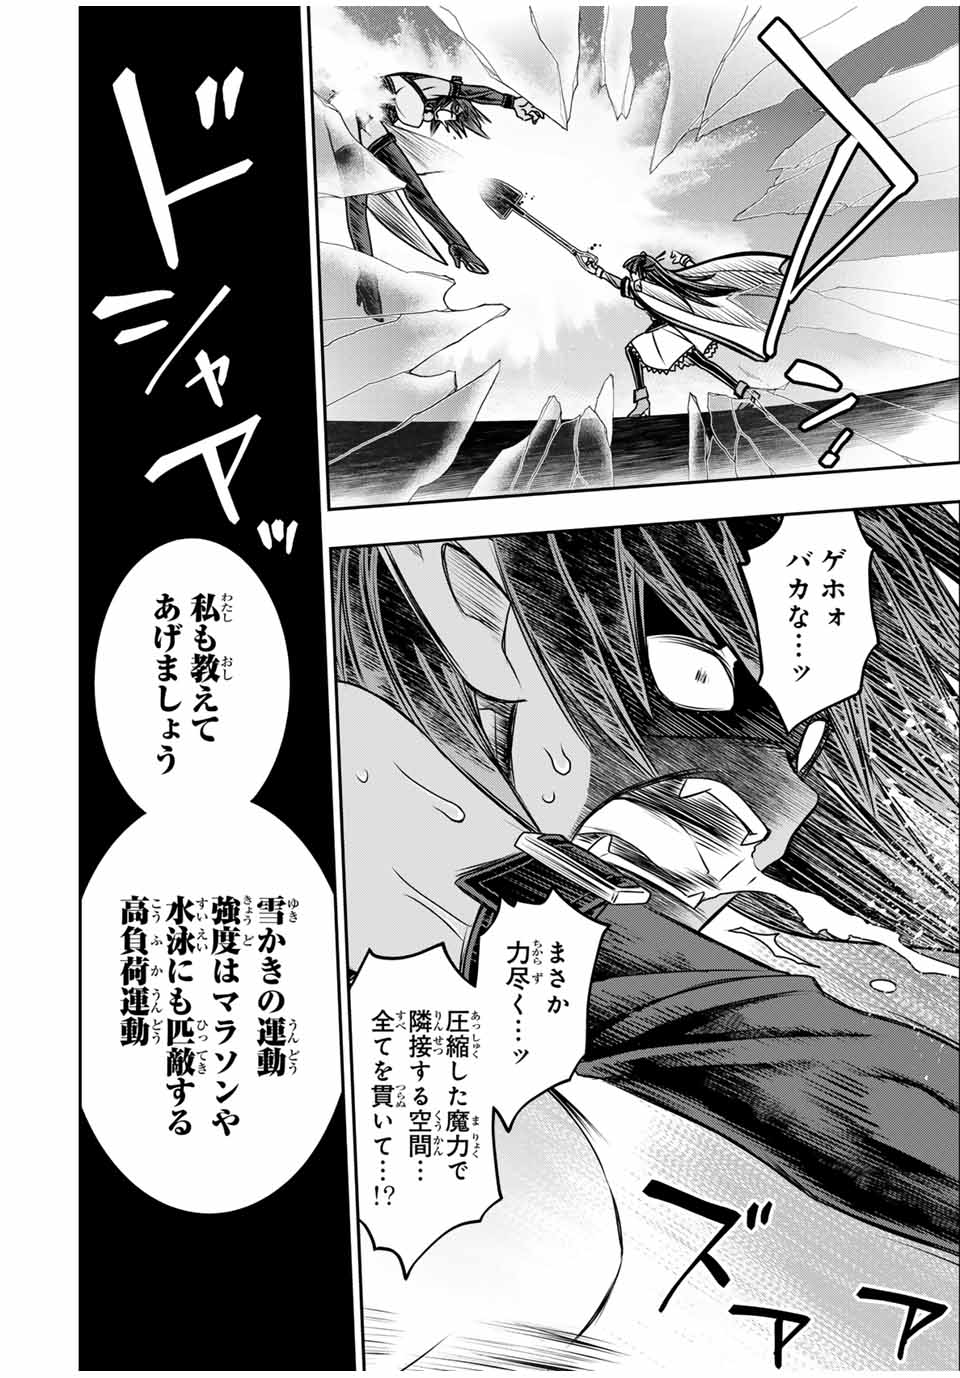 Nengan no Akuyaku Reijou (Last Boss) no Karada wo Teniiretazo!  - Chapter 26 - Page 18